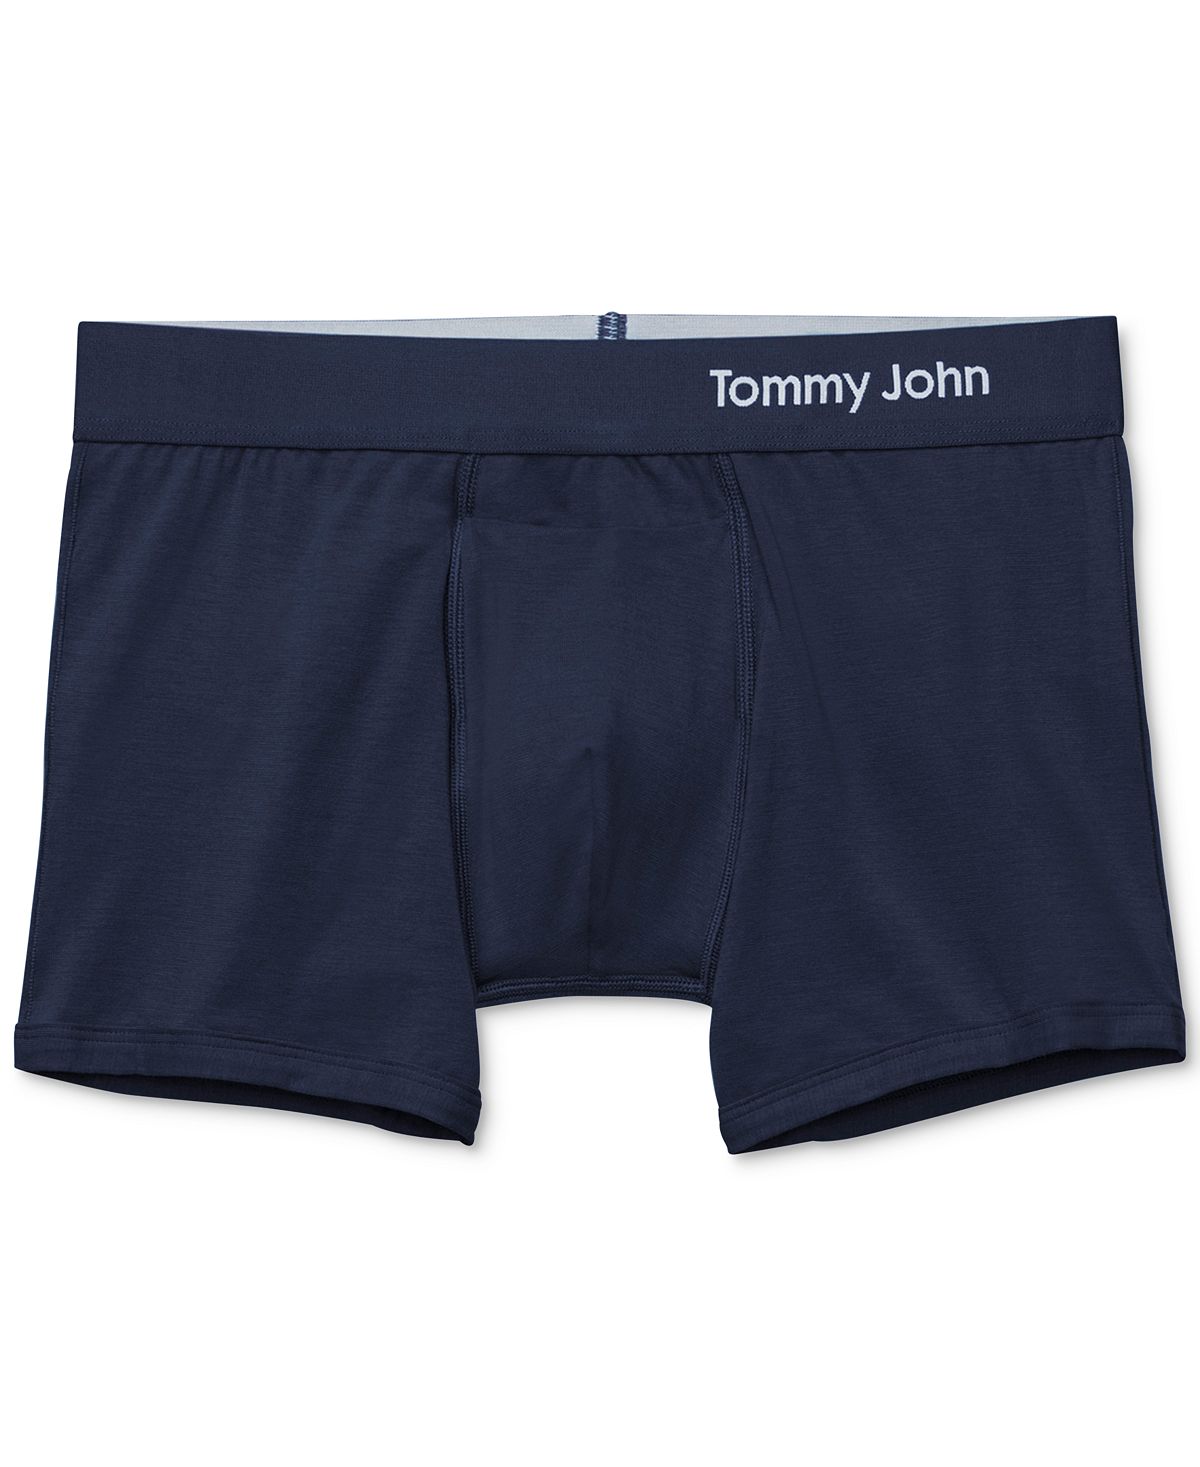 Tommy John Cool Trunks Navy